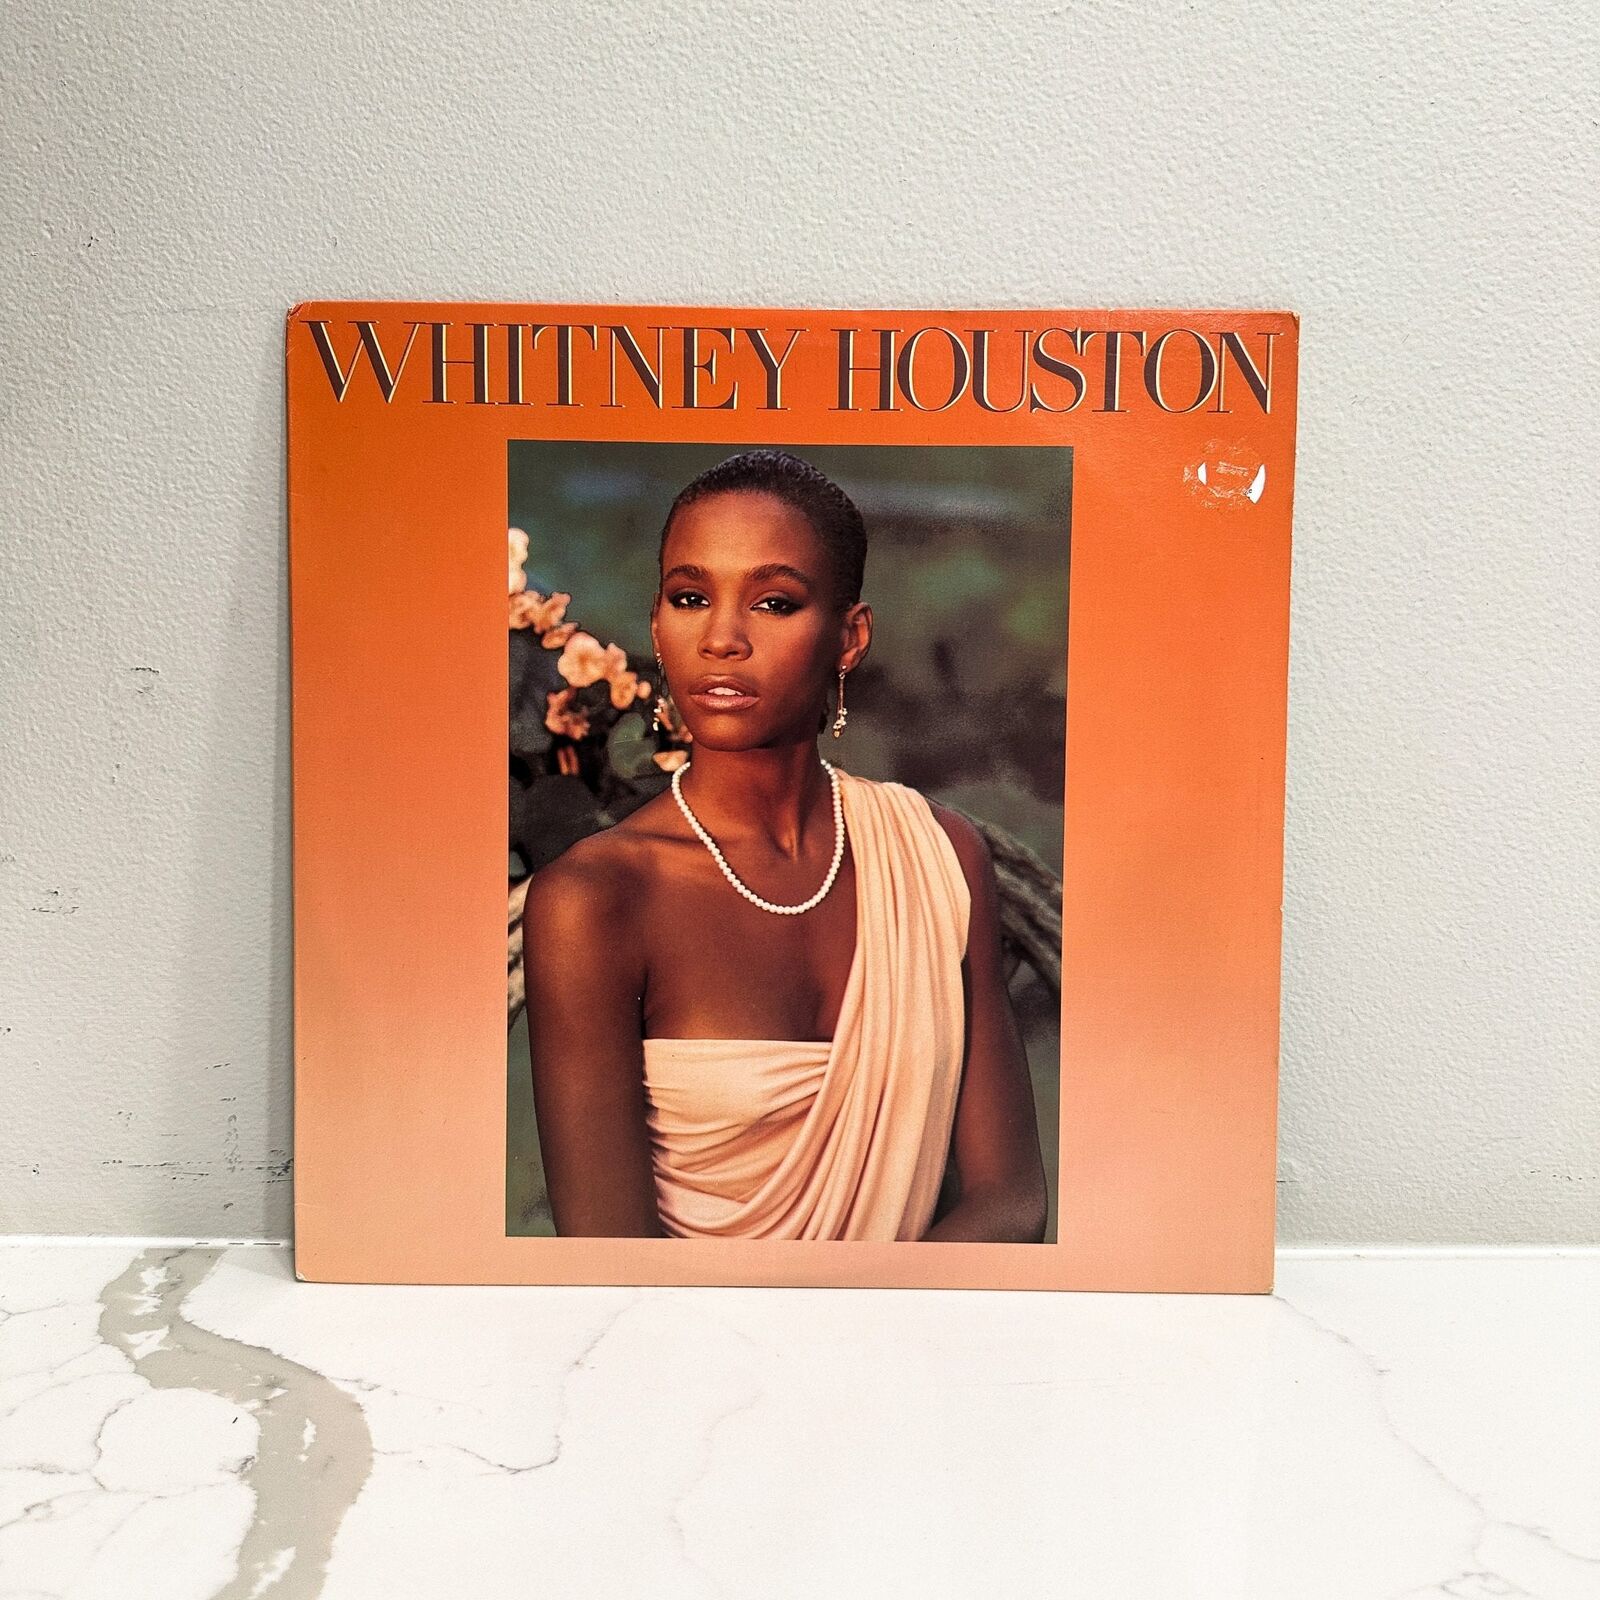 Whitney Houston – Whitney Houston - Vinyl LP Record - 1985